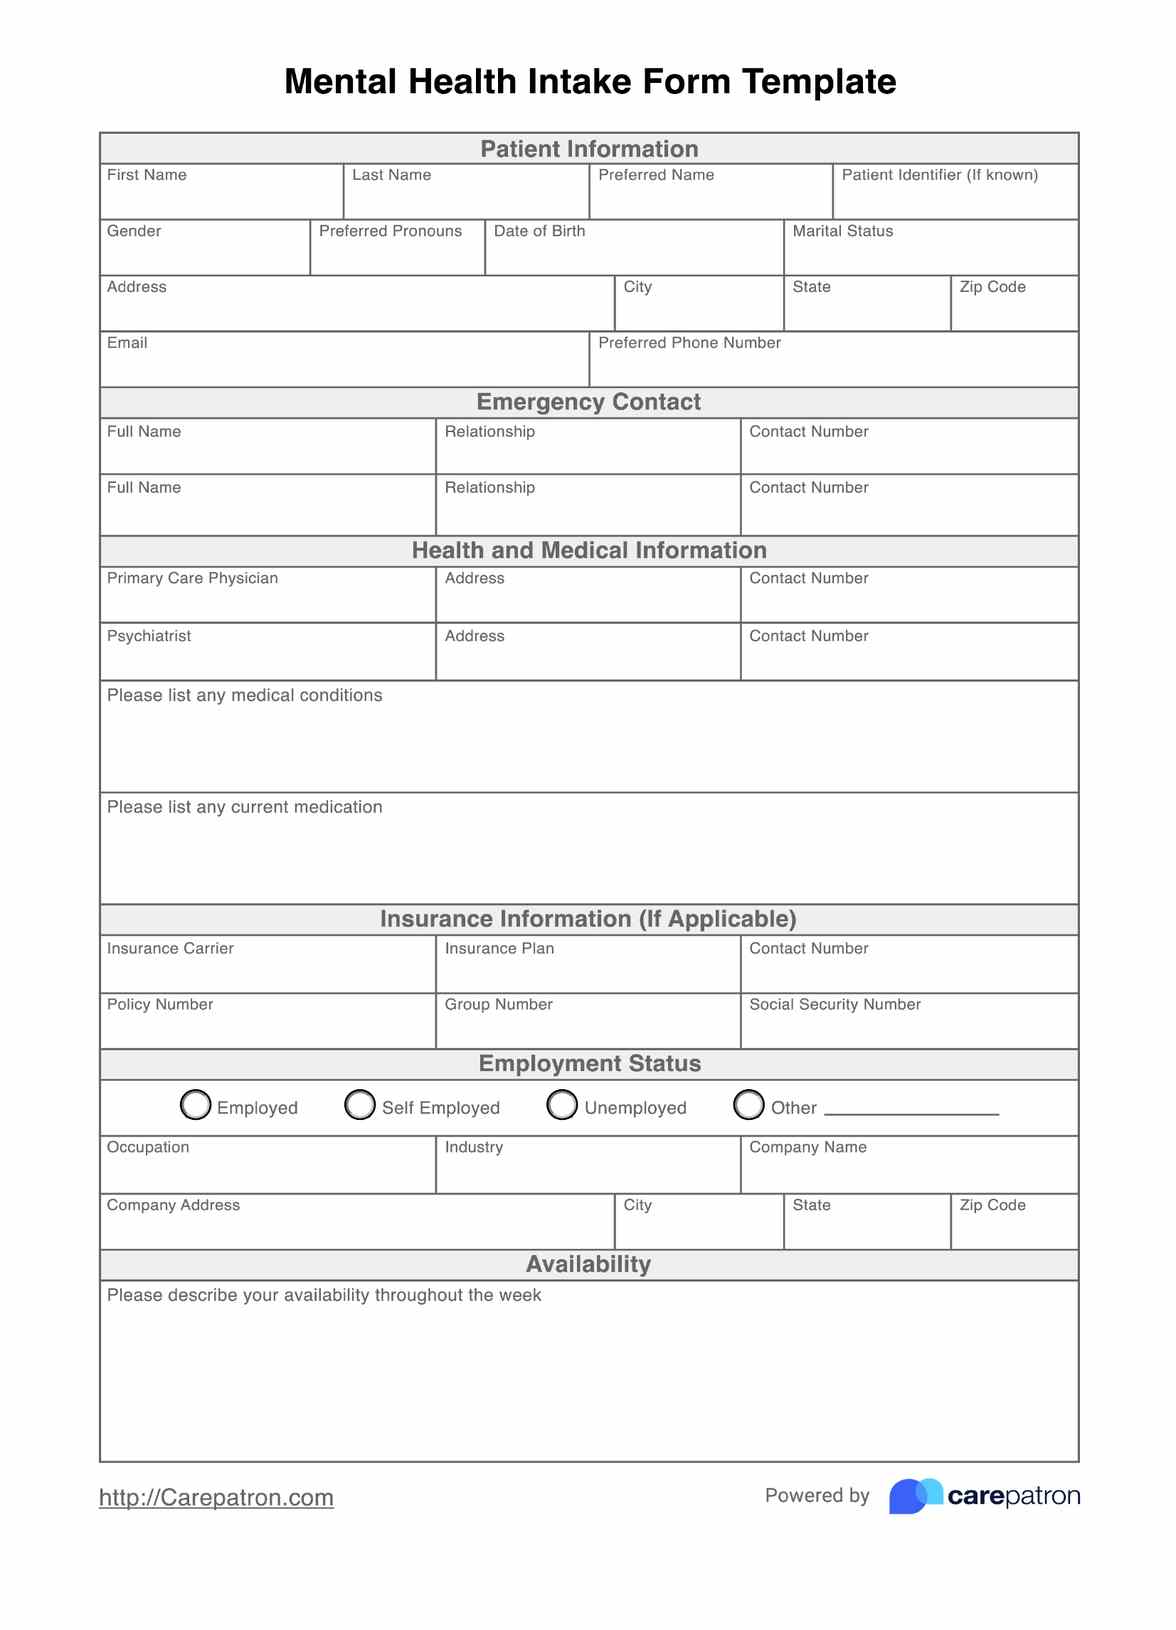 Mental Health Intake Form PDF Example